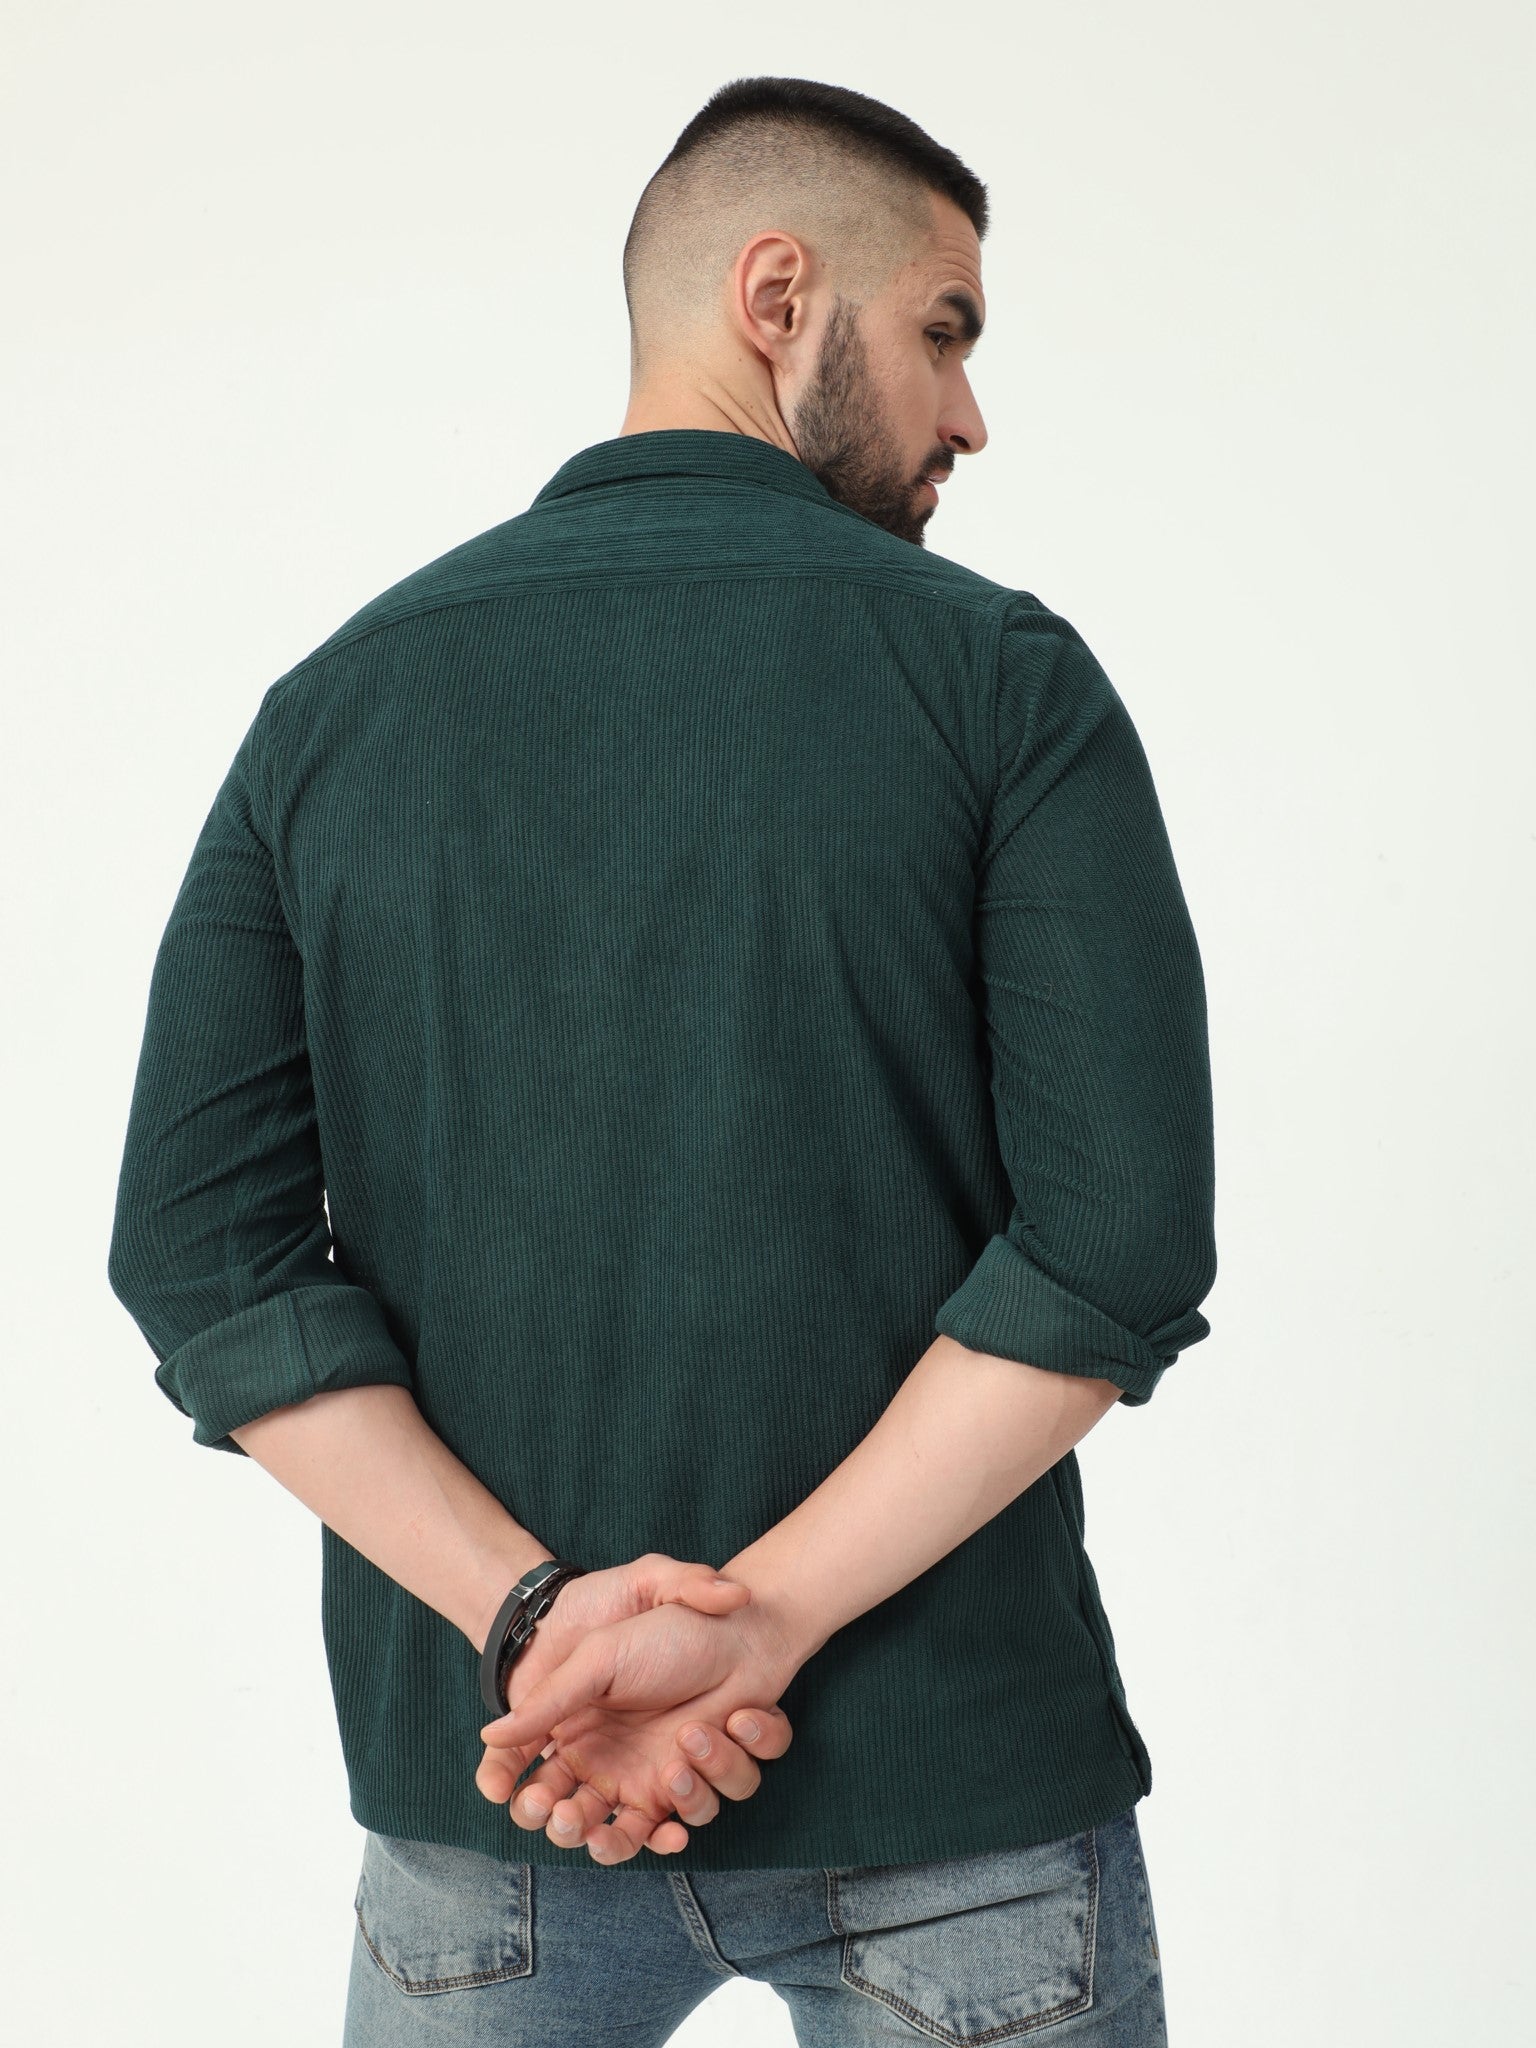 Vintage Dark Green Corduroy Shirt for Men 